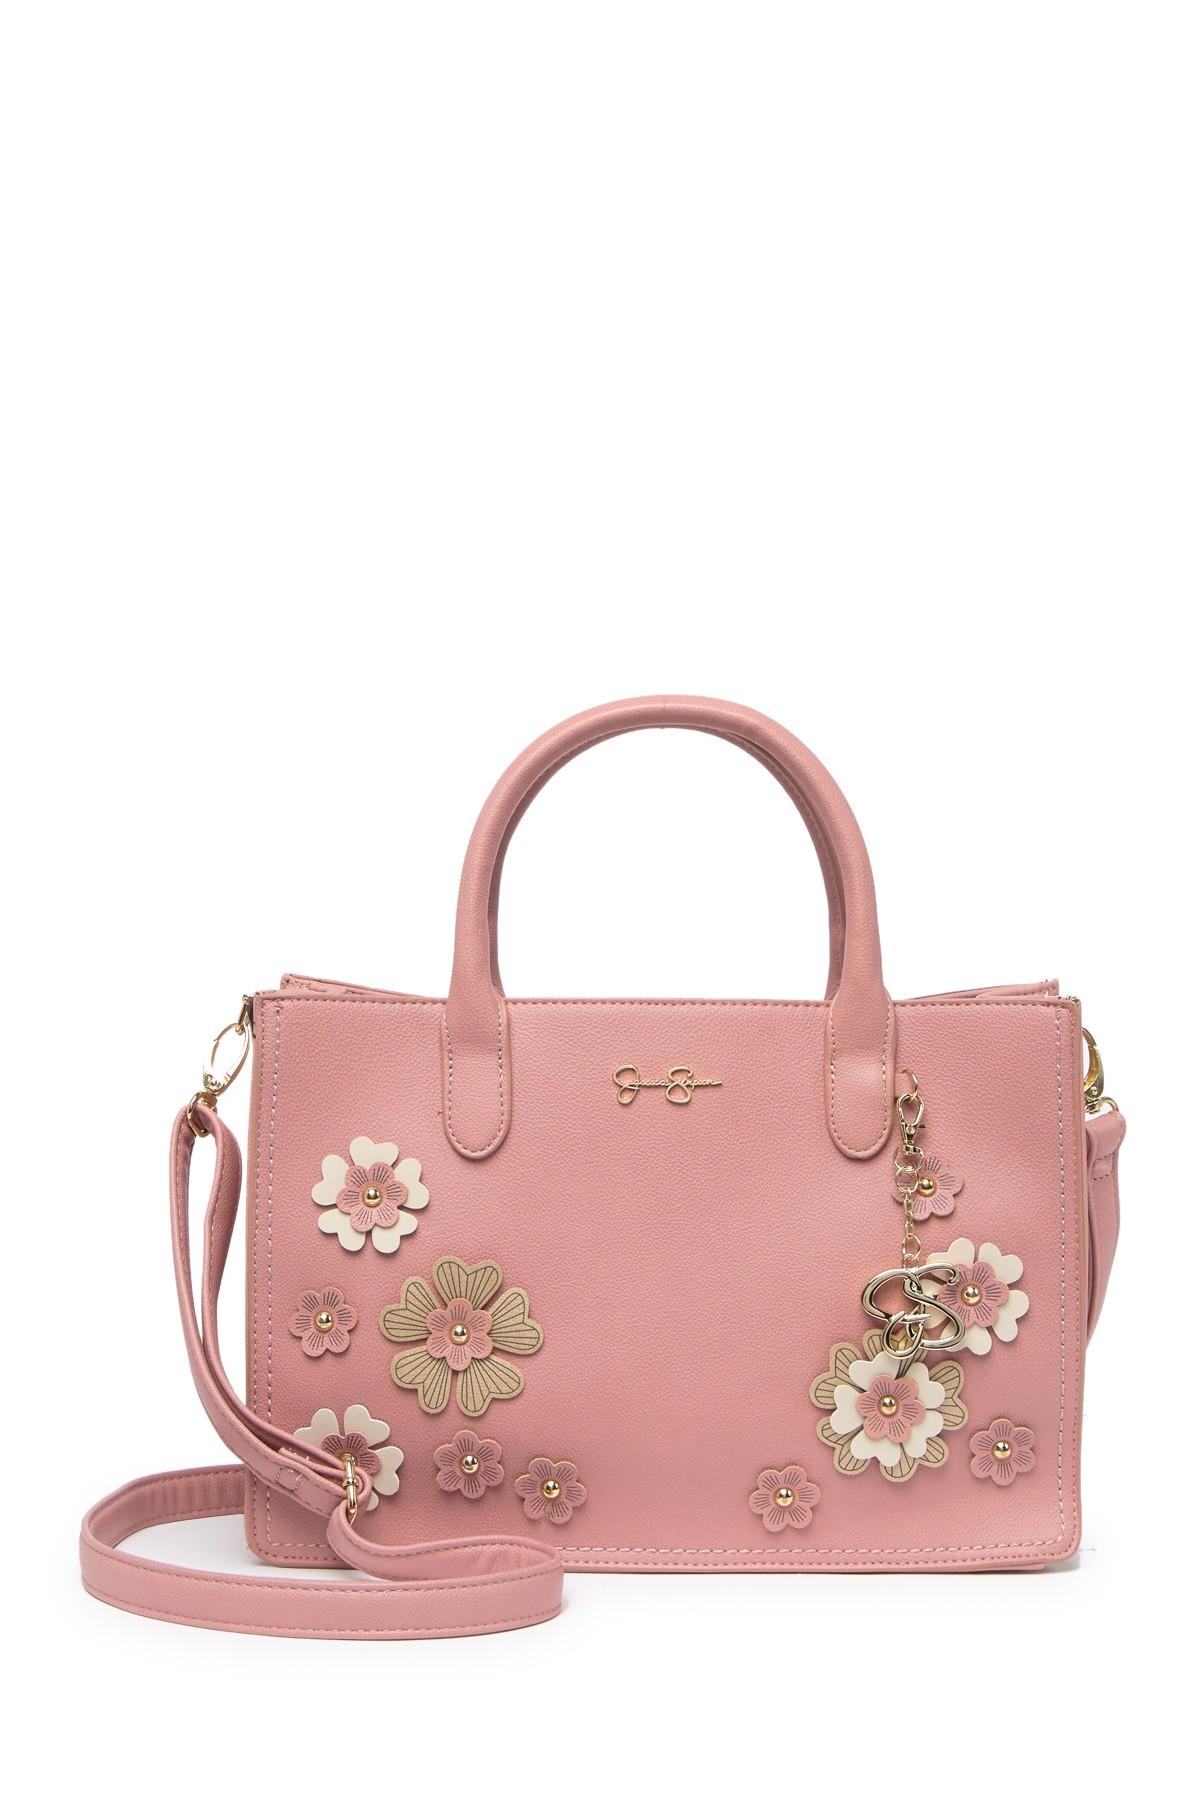 Jessica Simpson Rosalie Floral Applique Satchel Bag in Pink